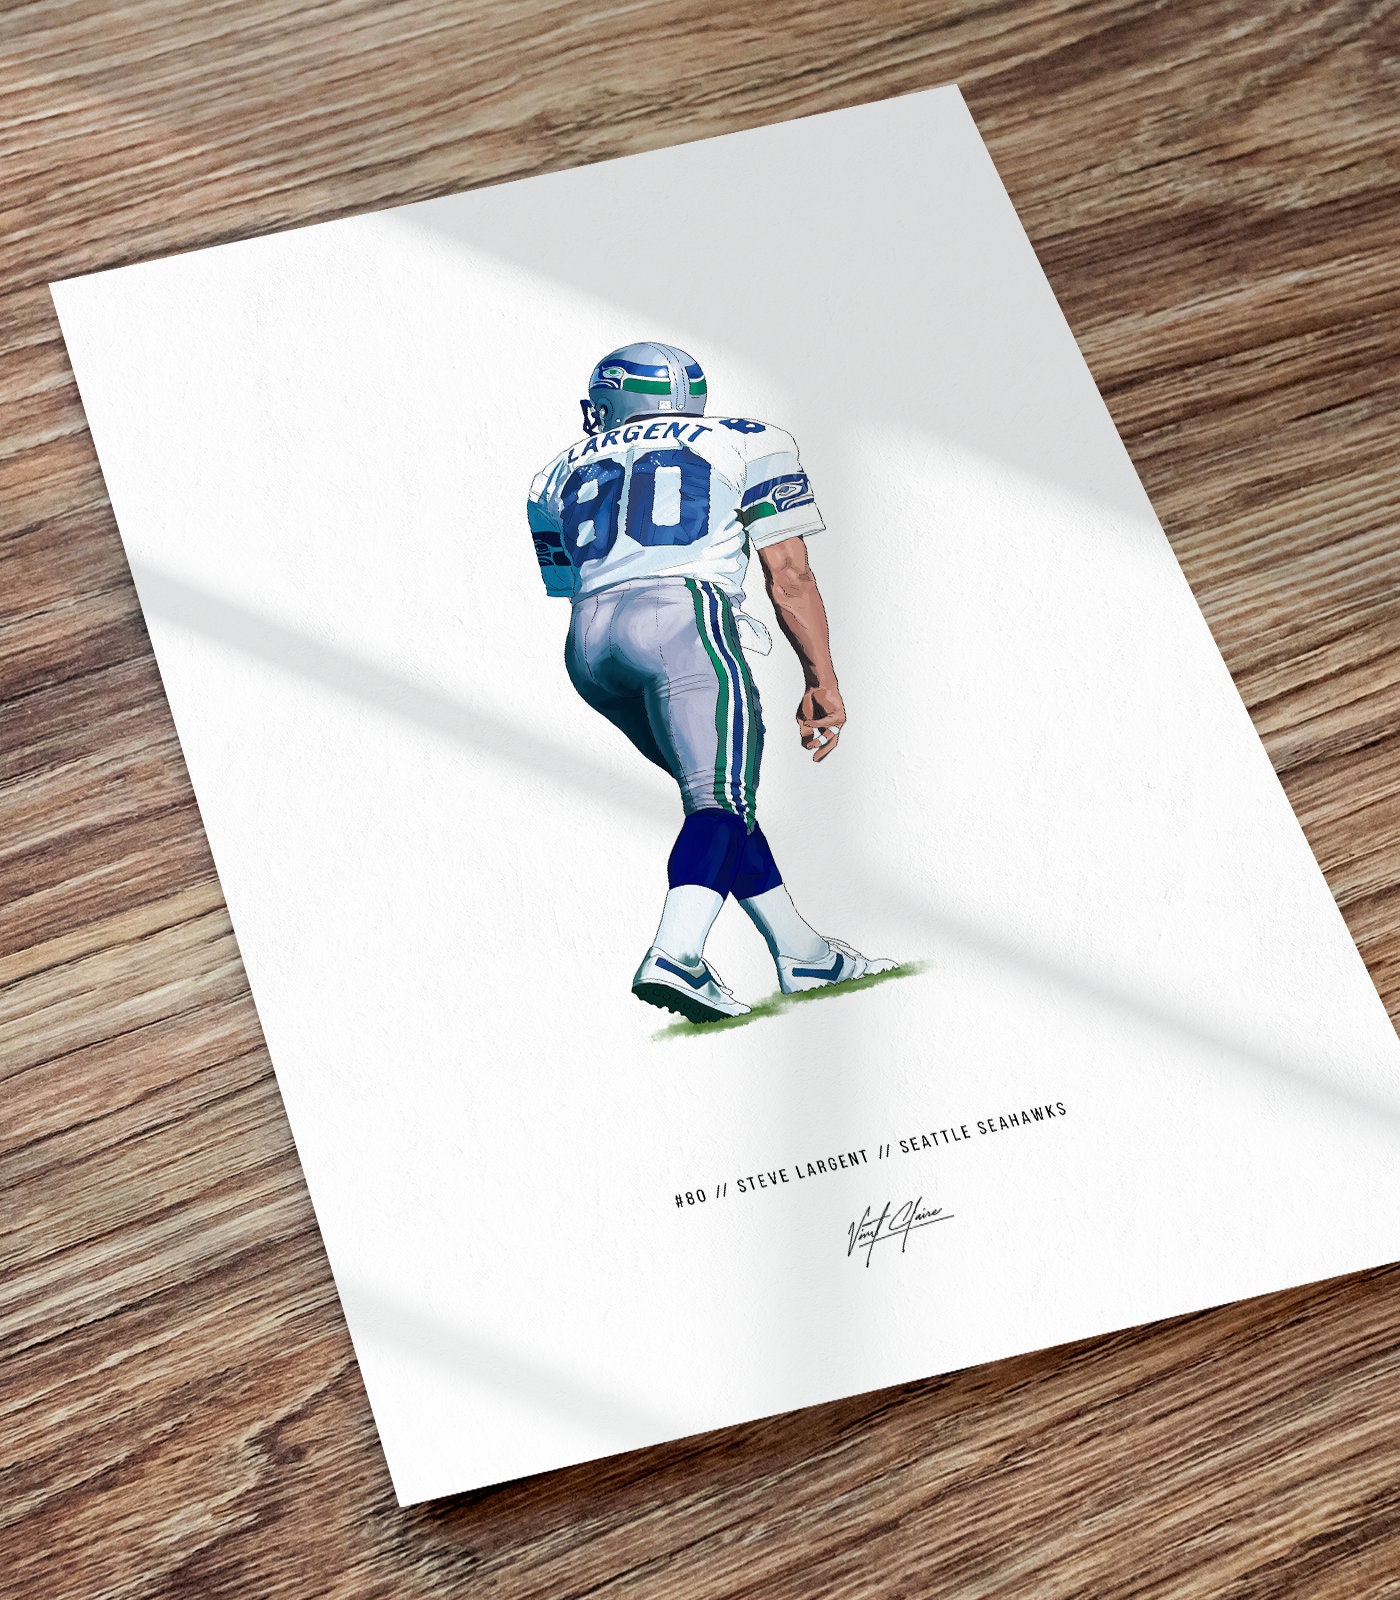 Steve Largent Seattle Seahawks Men's Nike NFL Game Football Jersey.